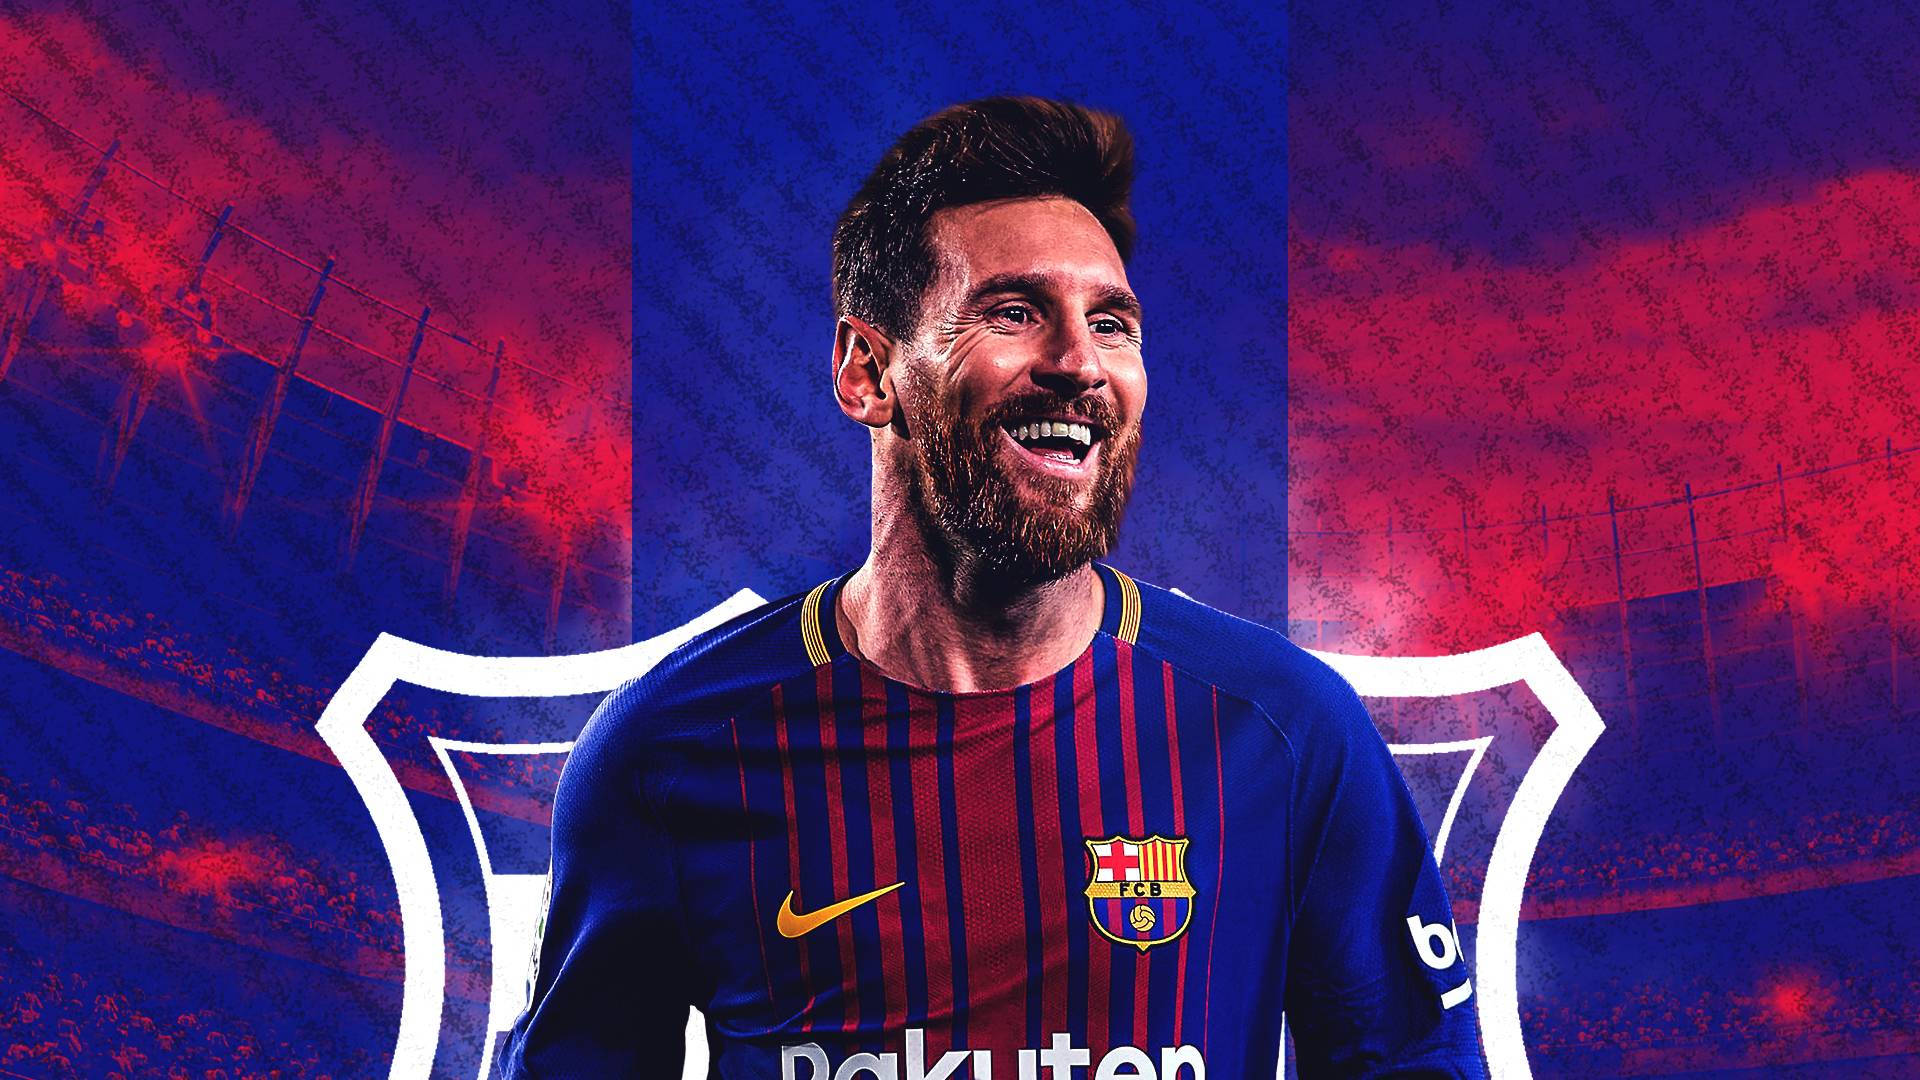 Free Messi Wallpaper Downloads, Messi Wallpaper for FREE